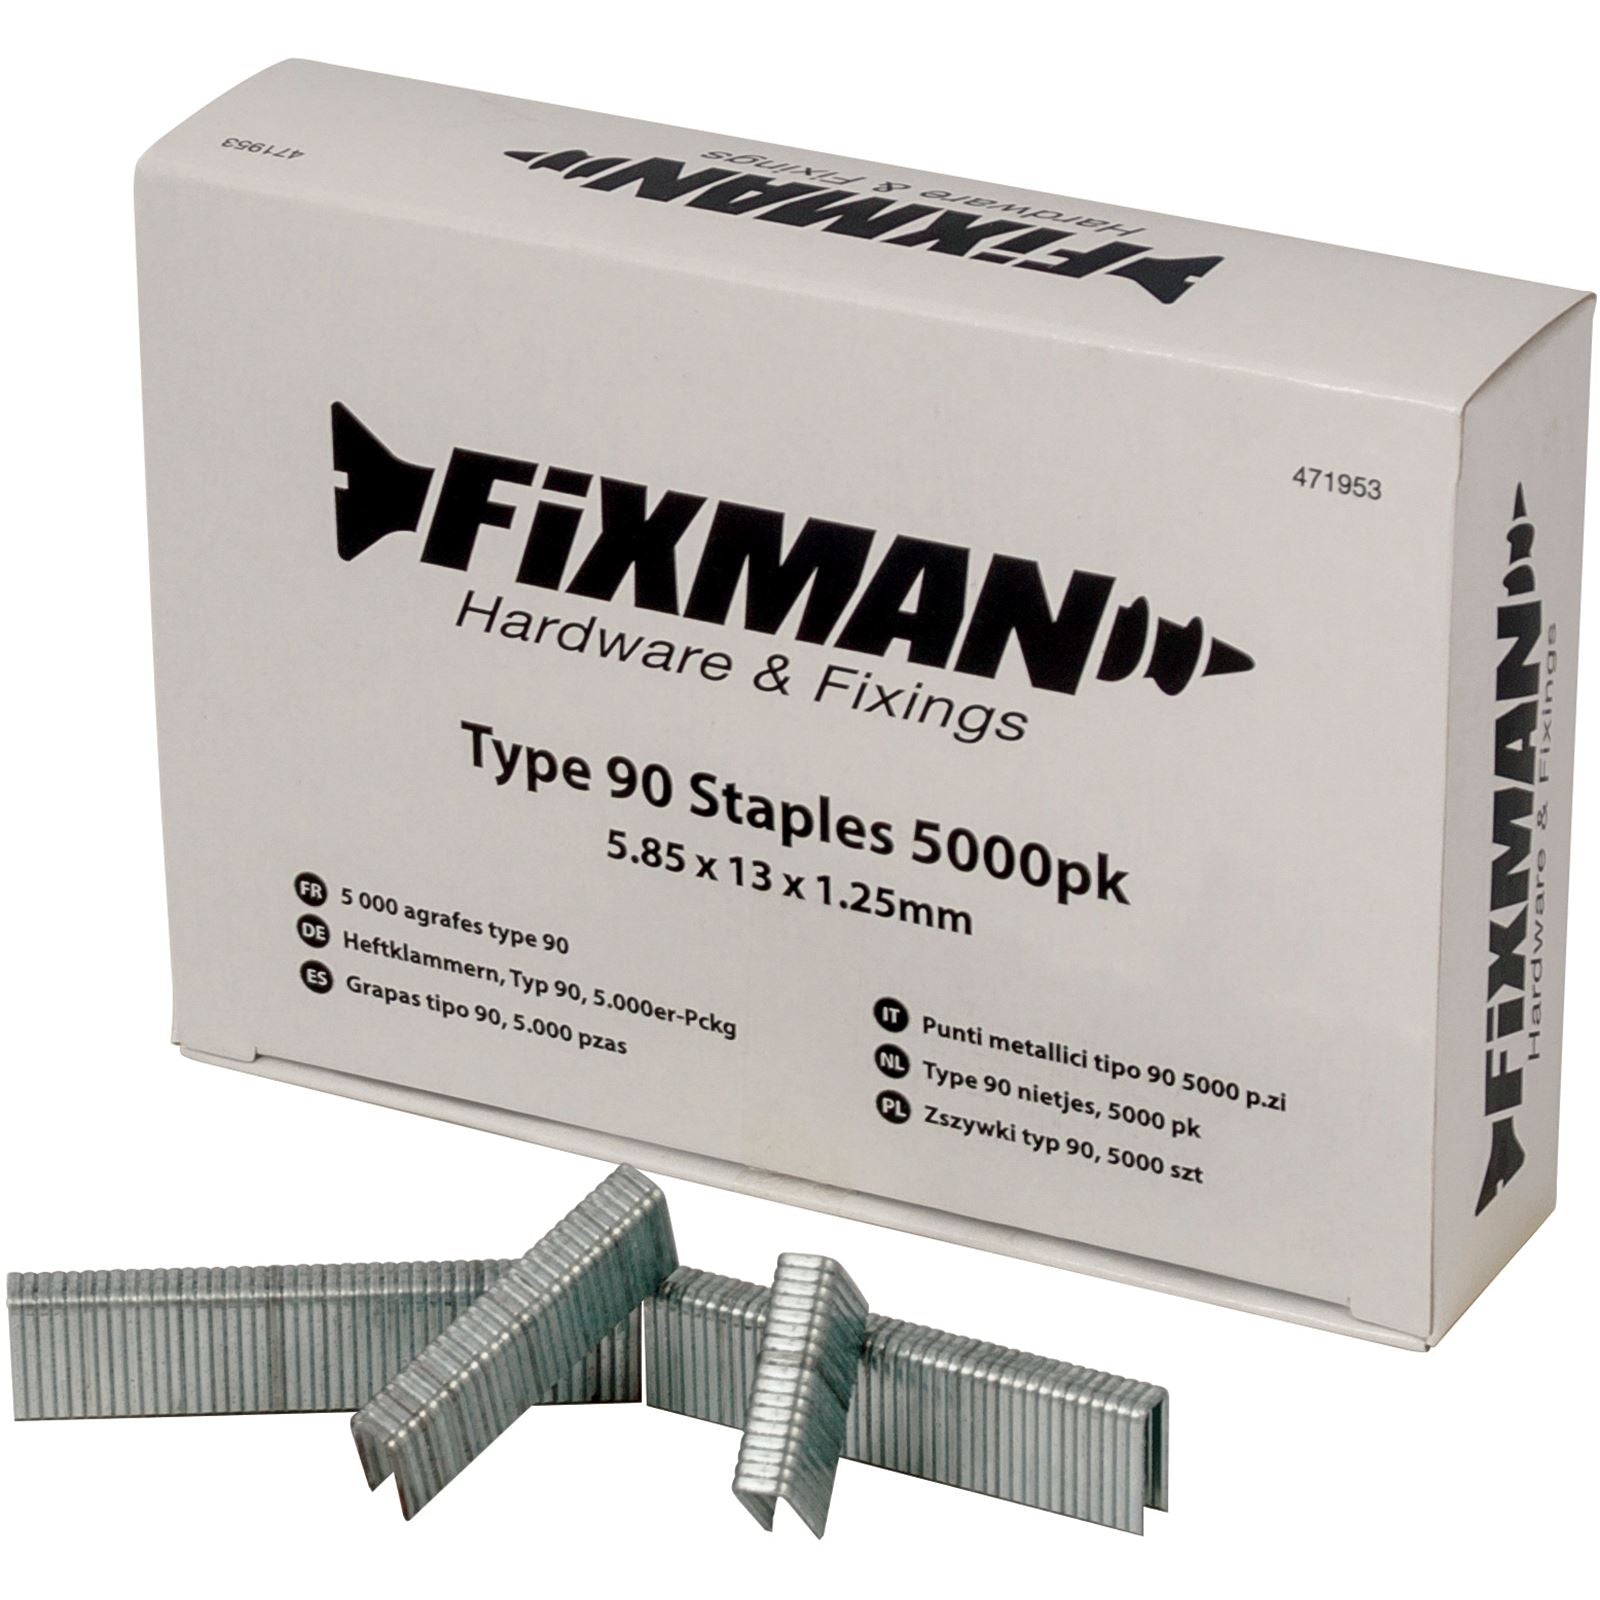 Fixman 5000pc Type 90 Staples 10-22mm Heavy Duty Crown Stapler Gun Fixings